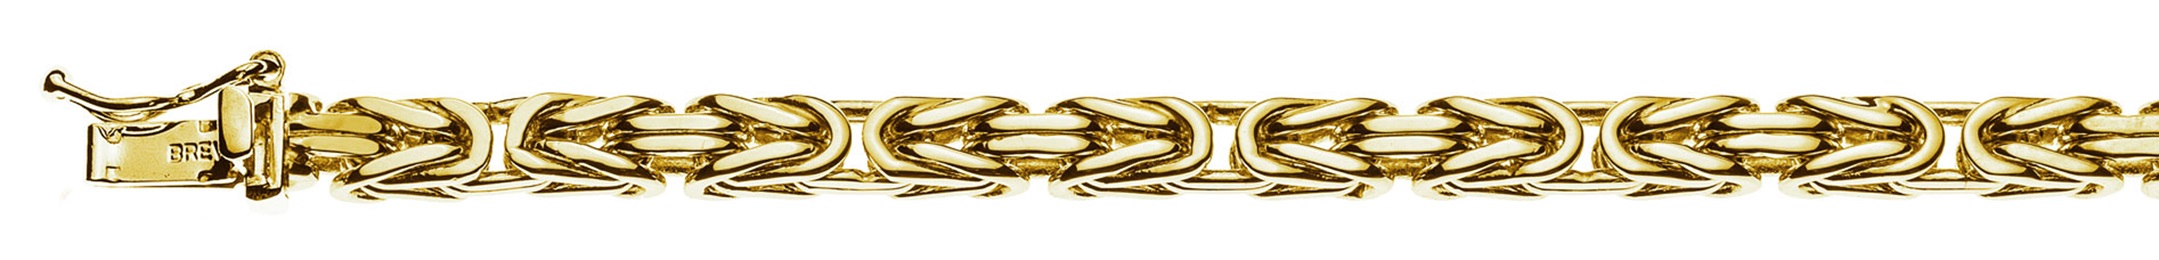 AURONOS Prestige Bracelet 18k yellow gold king chain 4mm 22cm 